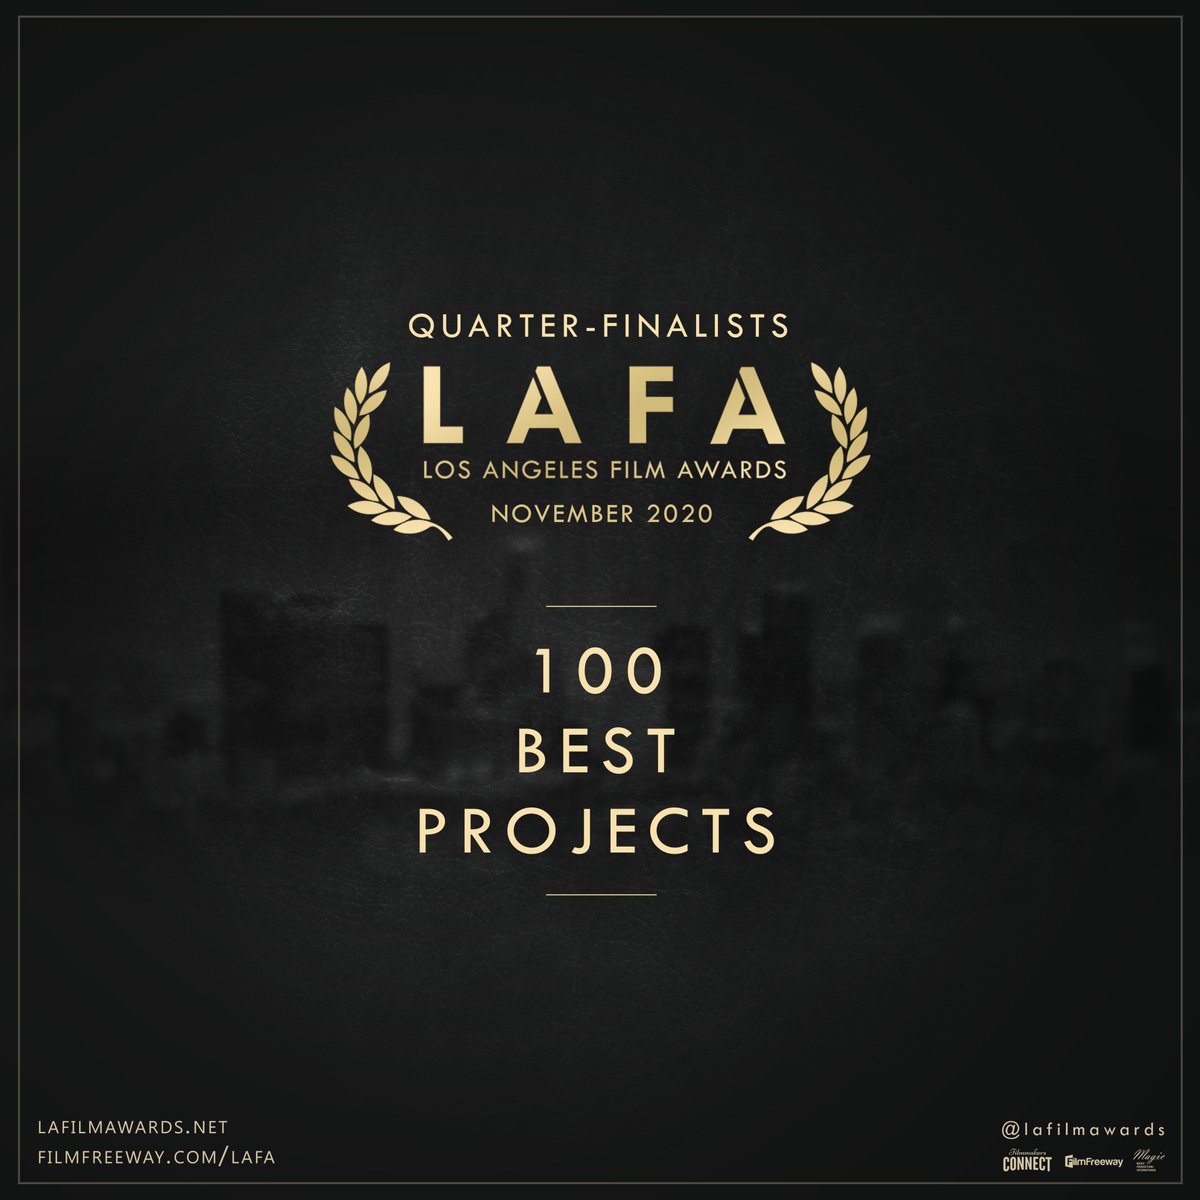 Congratulations to the Quarter-Finalists! filmfreeway.com/lafa